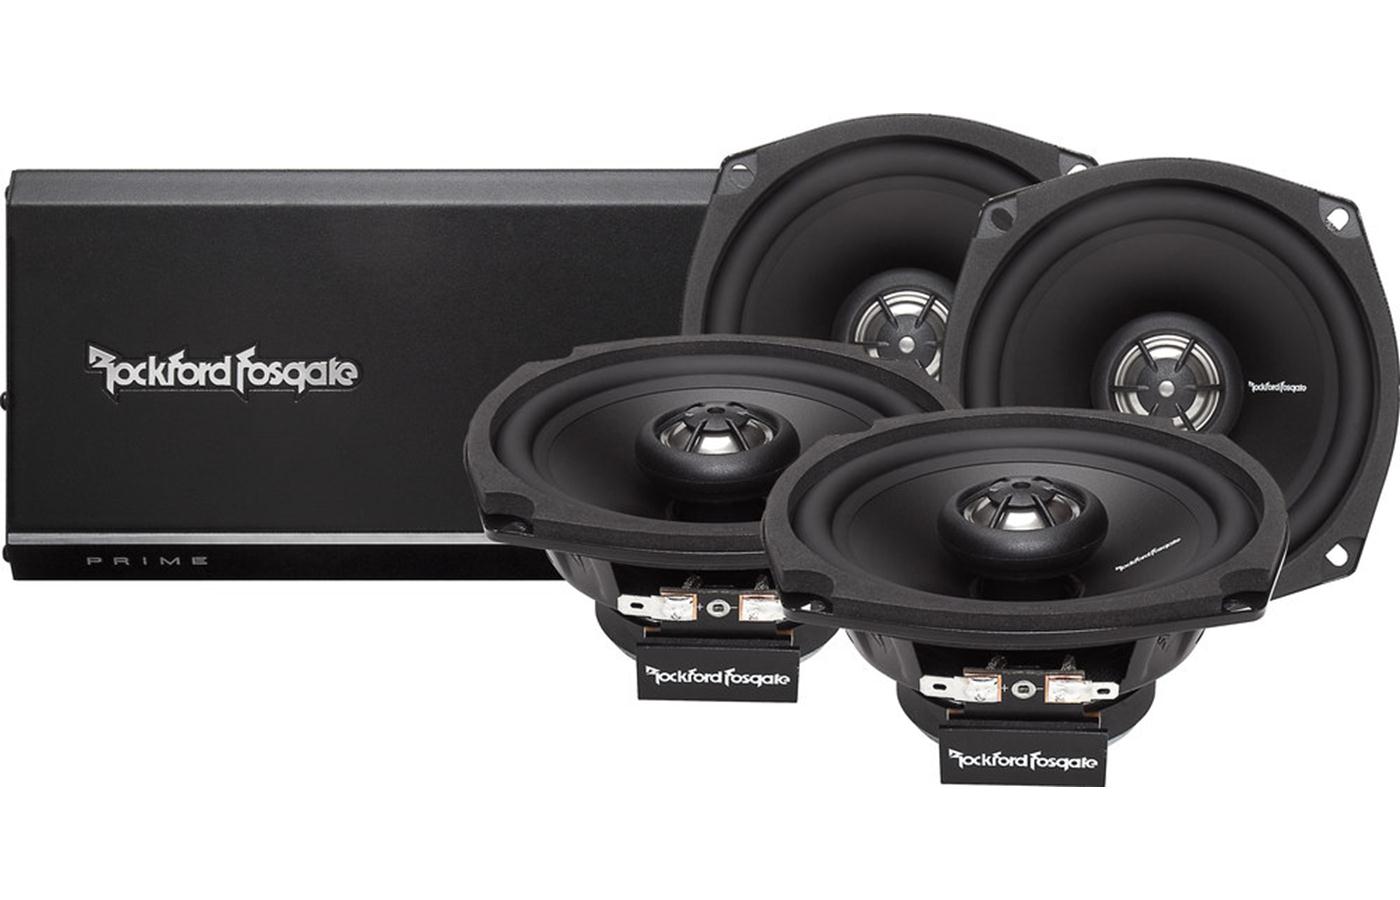 Rockford Fosgate Prime R165-S component speaker system at